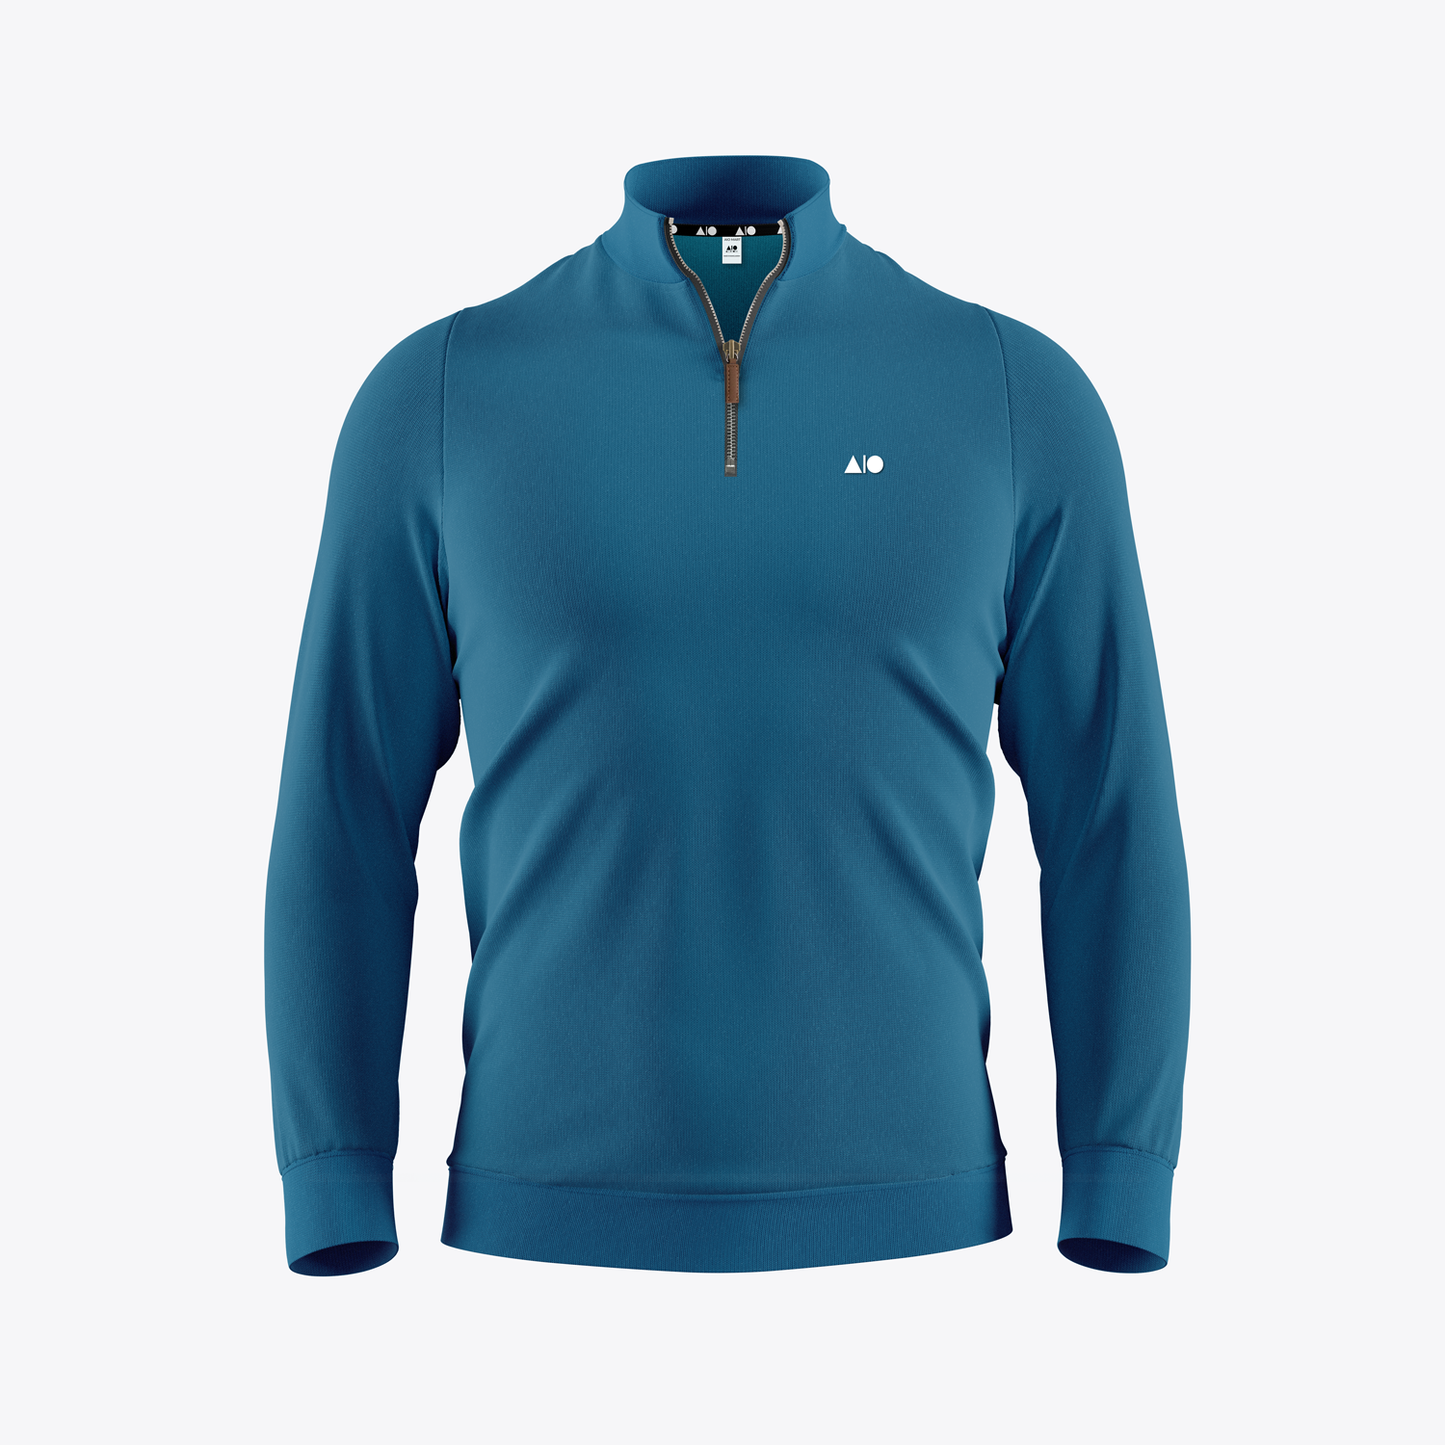 Mens Sweatshirt (Zipper) - Ocean Blue